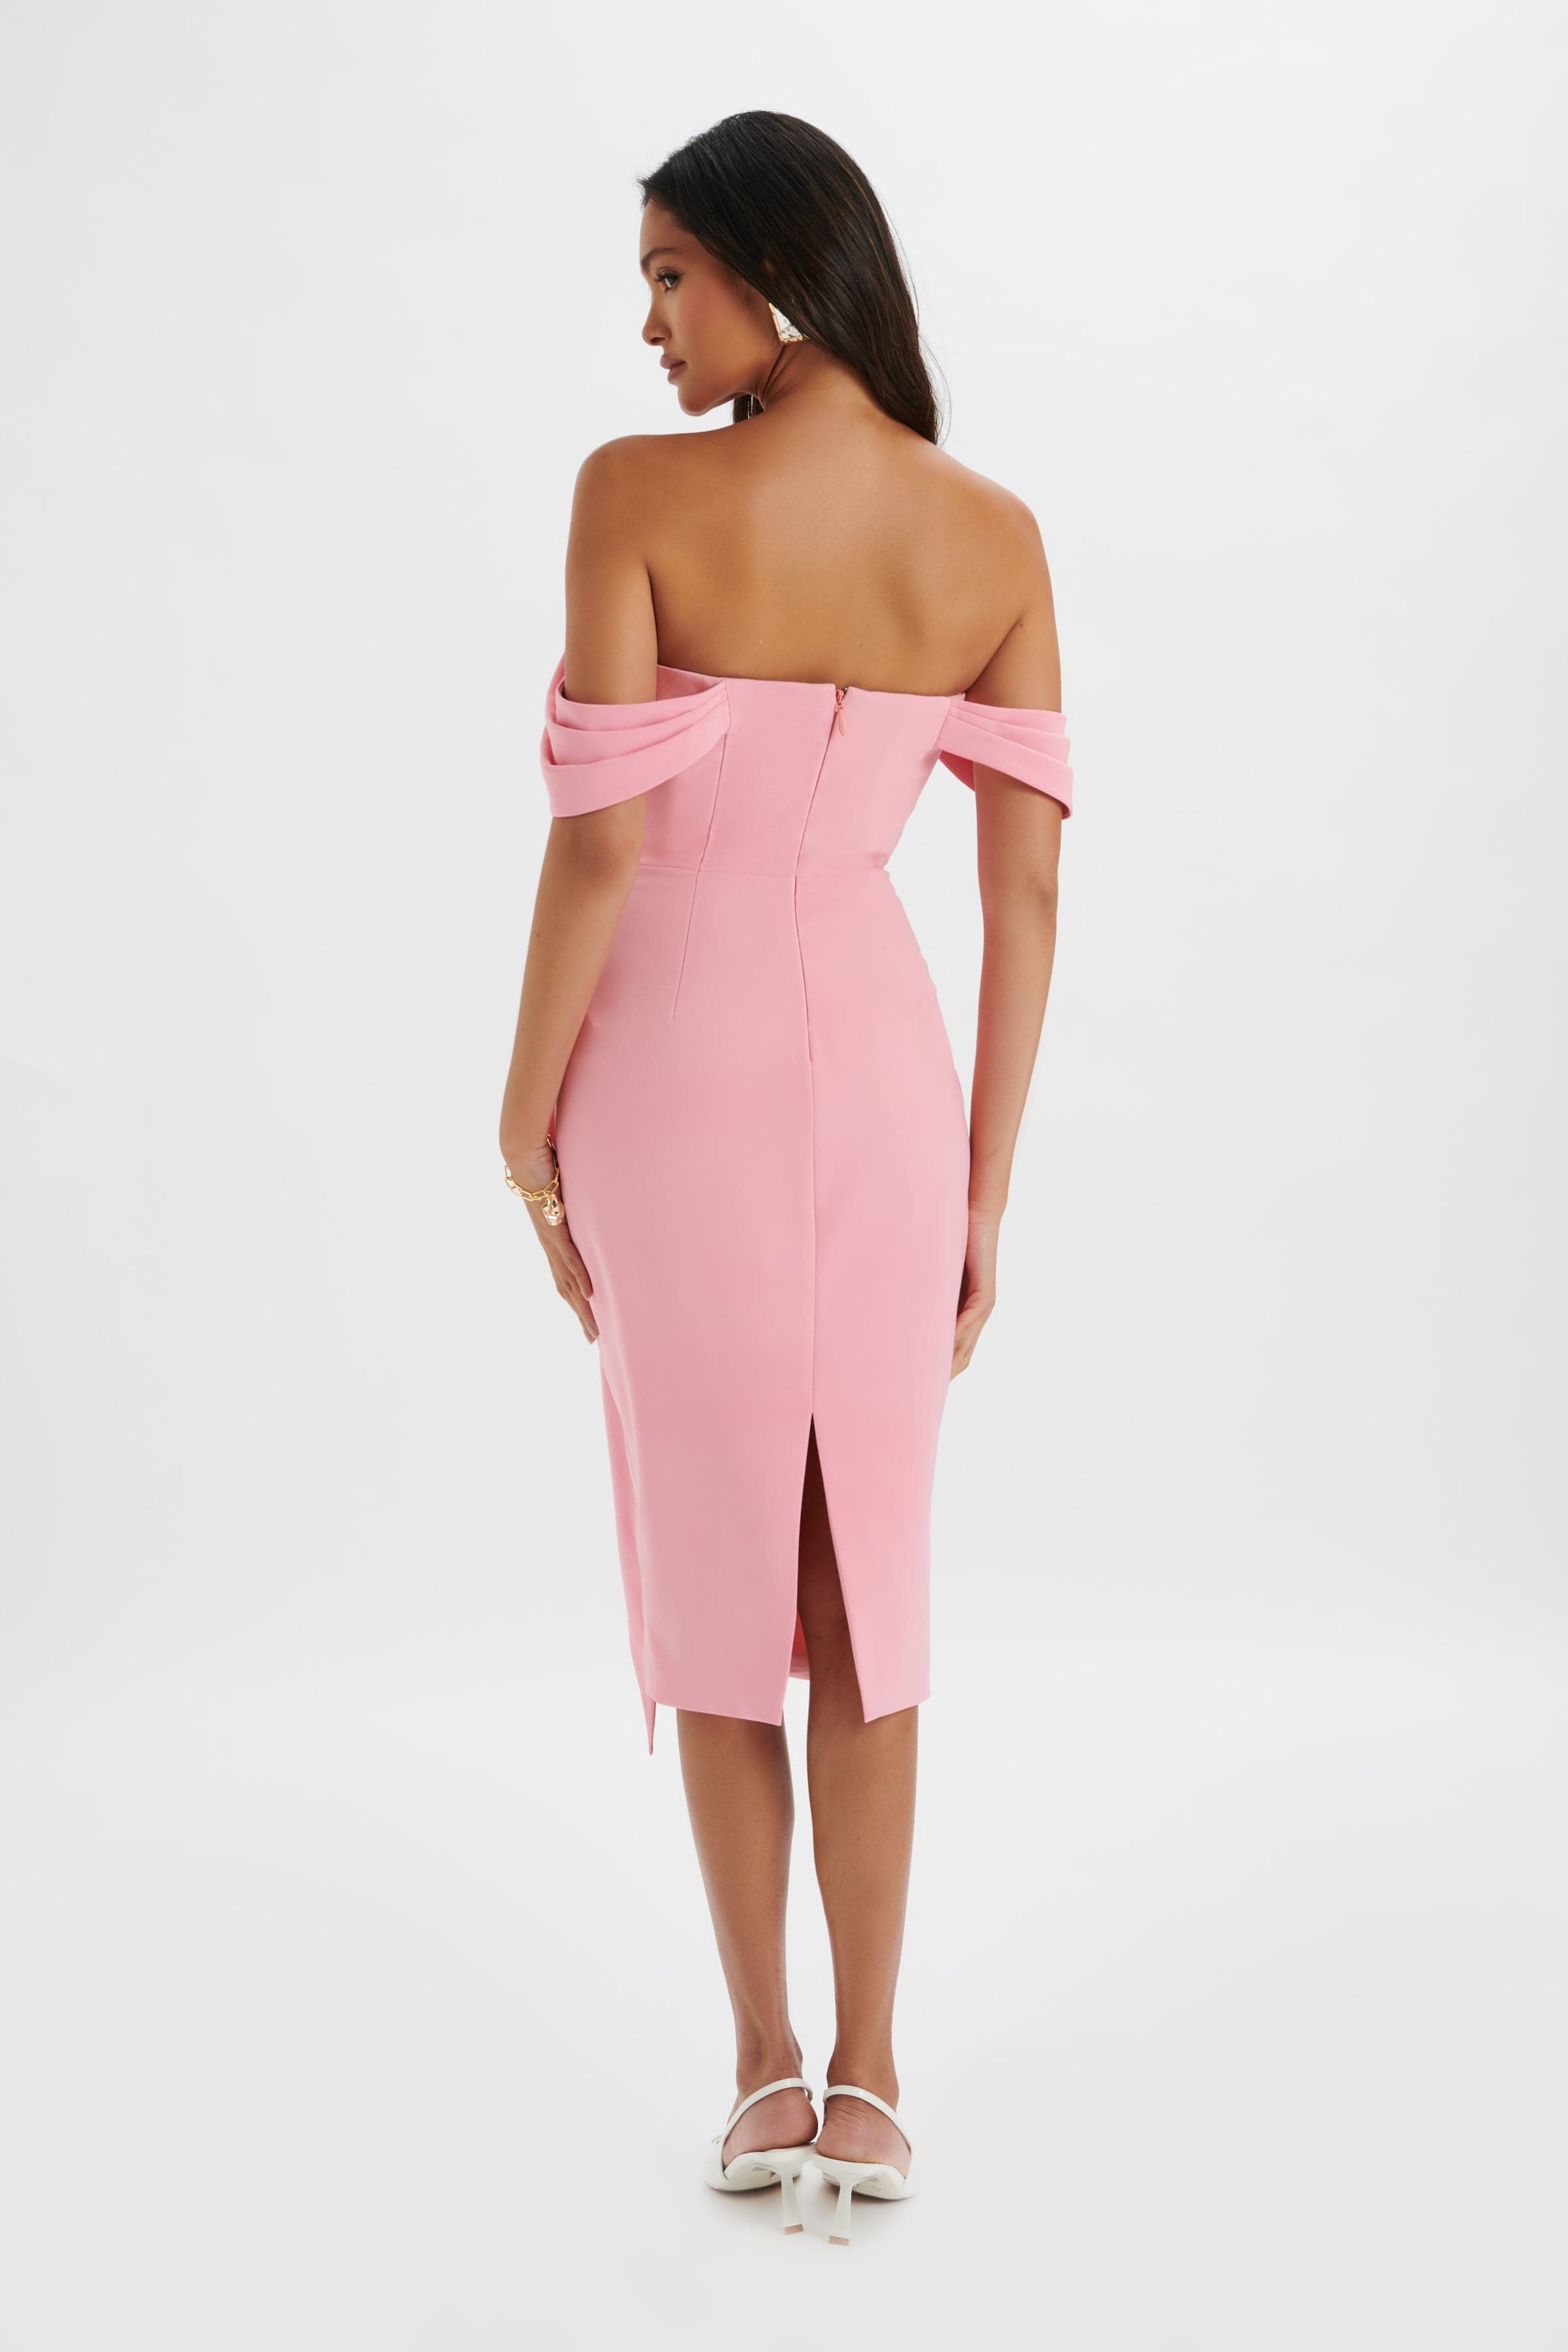 LORI Off Shoulder Bow Detail Midi Dress in Pink